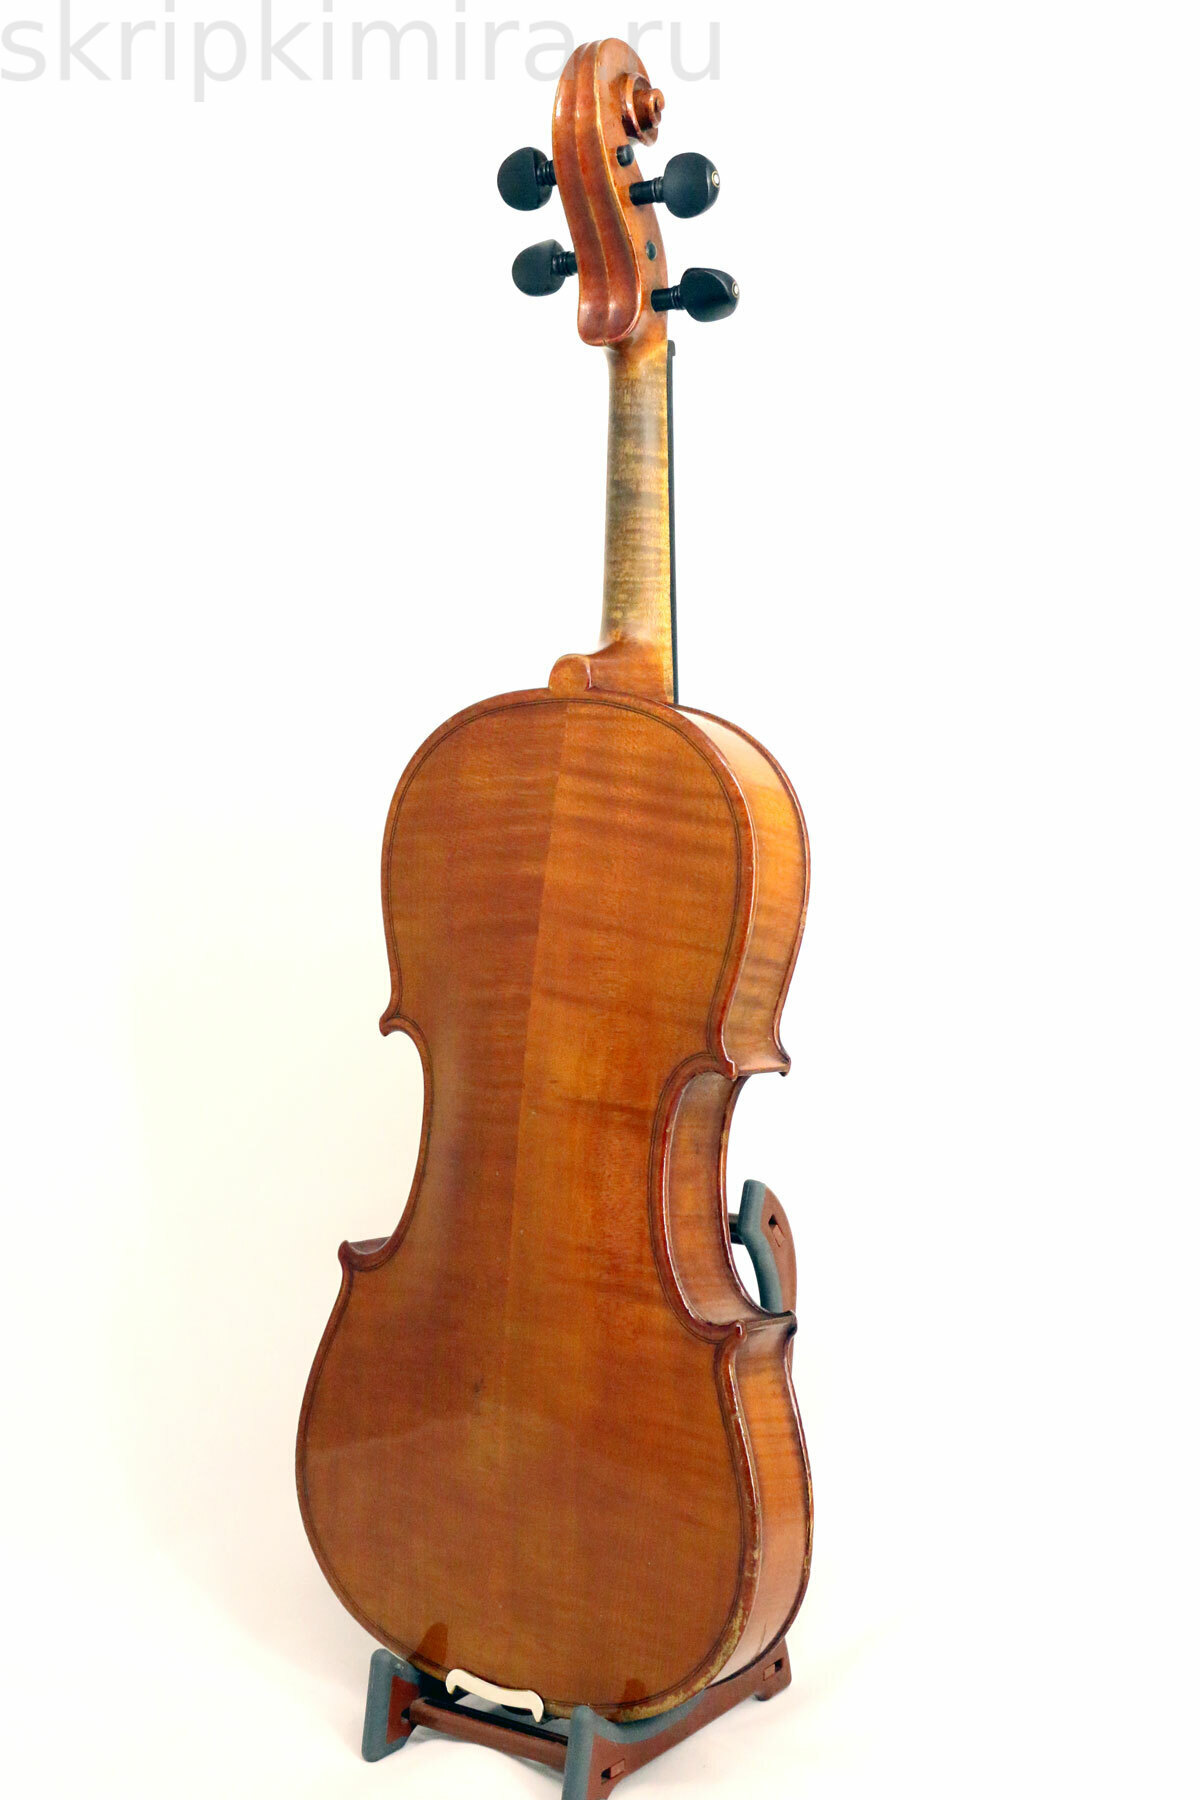 Французская скрипка. Головка скрипки французская школа. Фото скрипка мастеровая Karl Hofner 4/4.